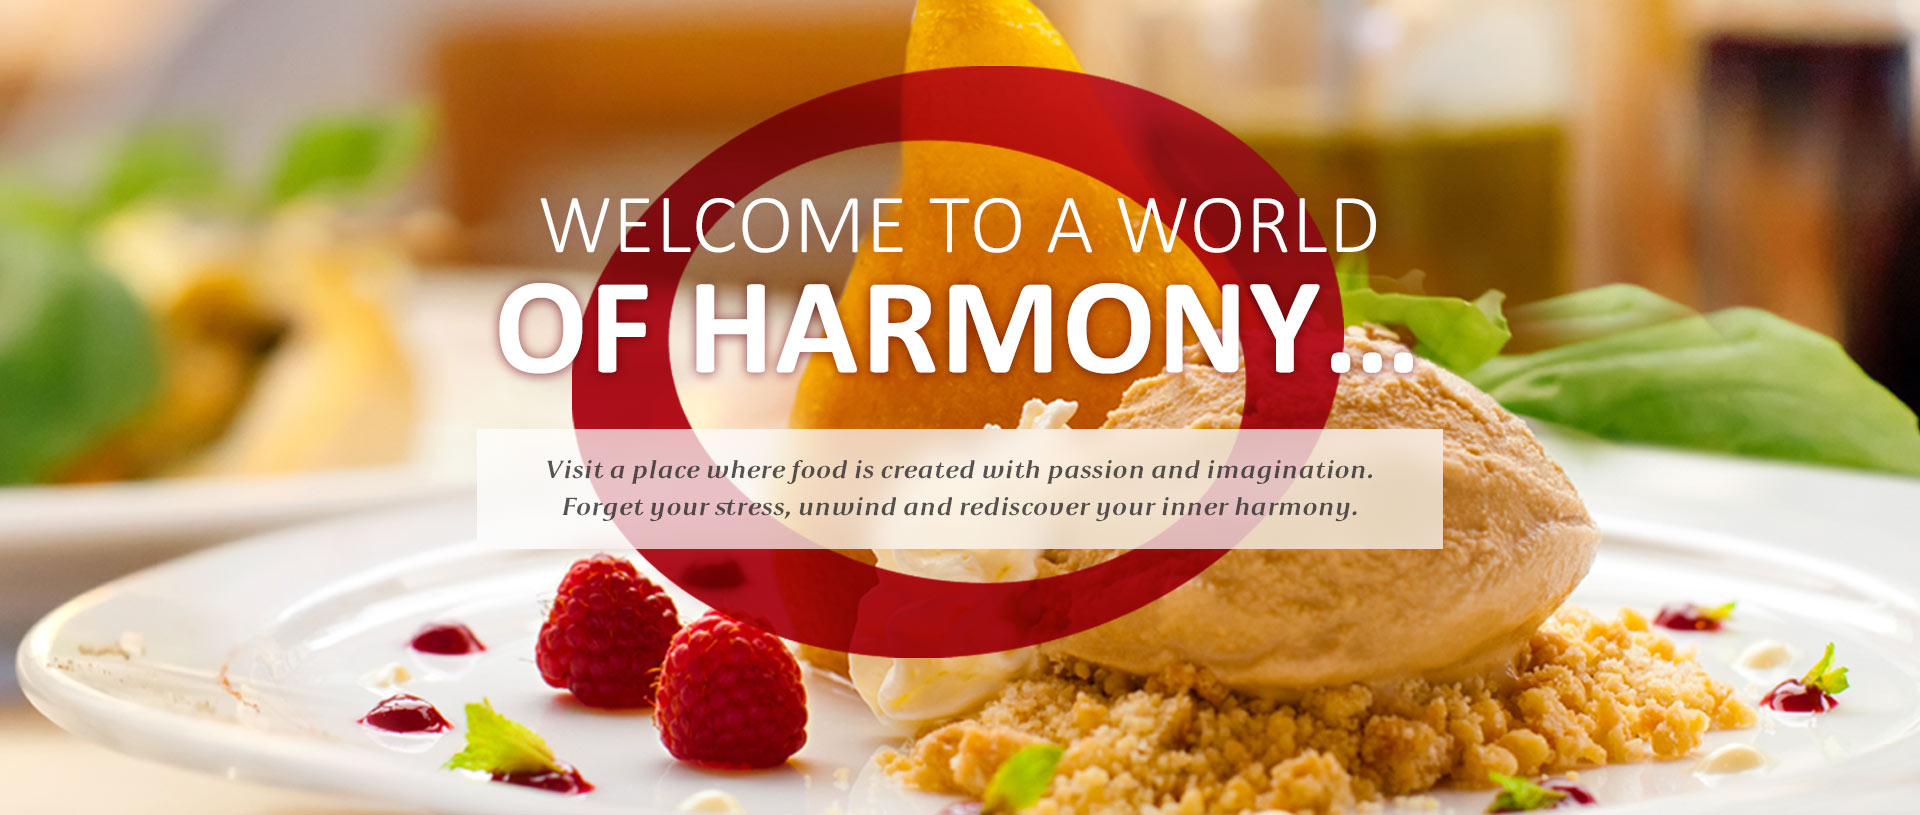 Harmony Restaurant - Second slider image